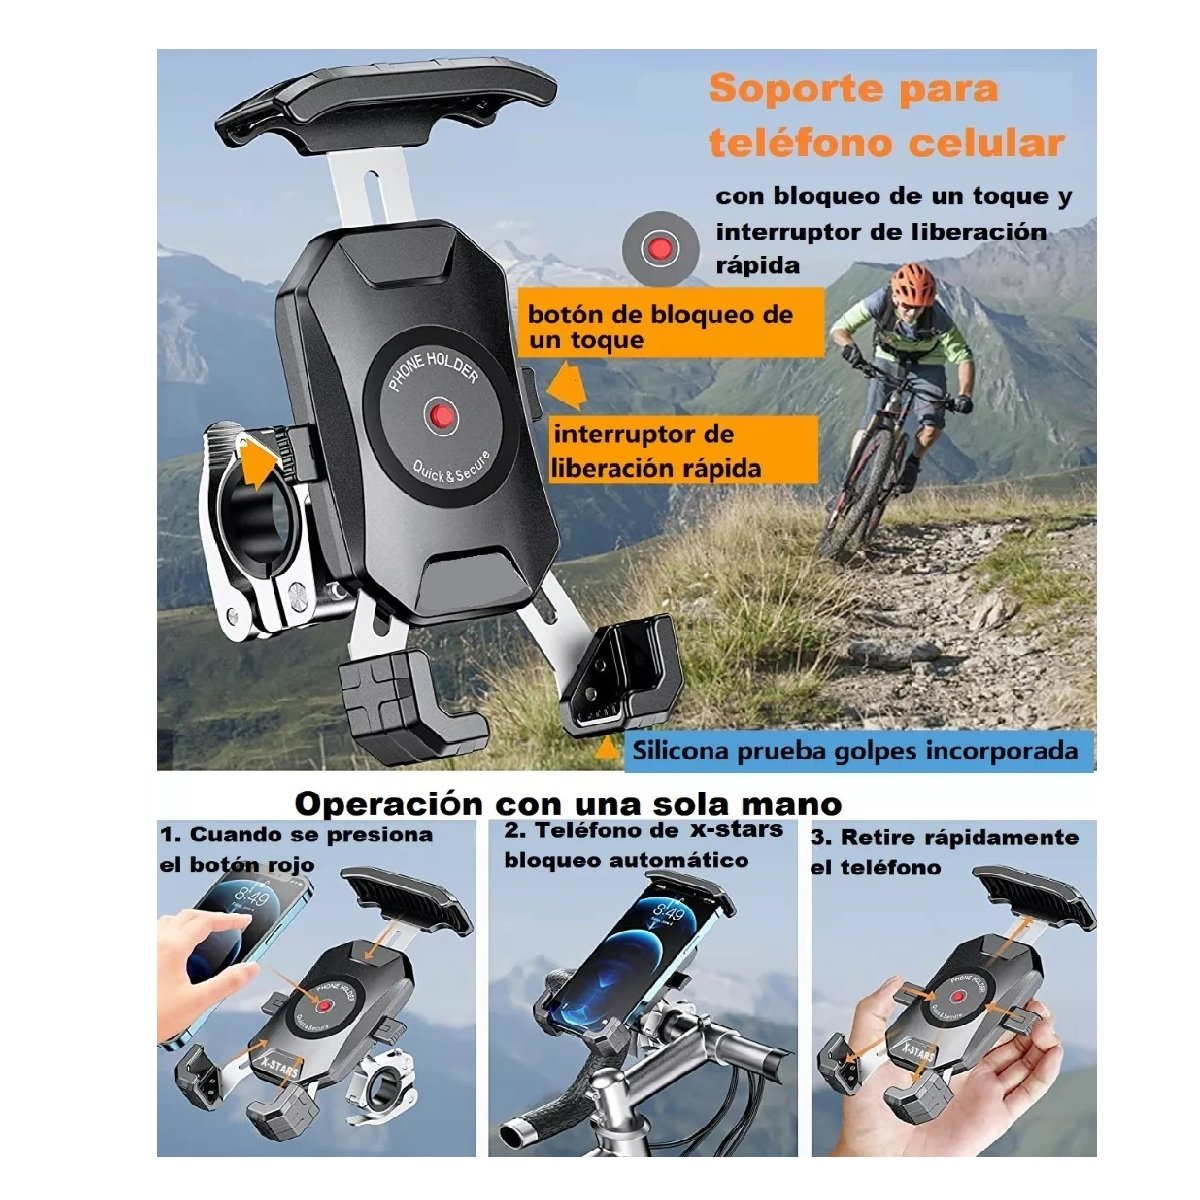 Soporte de Celular / Portacelular Funda Proteccion Moto o Bici